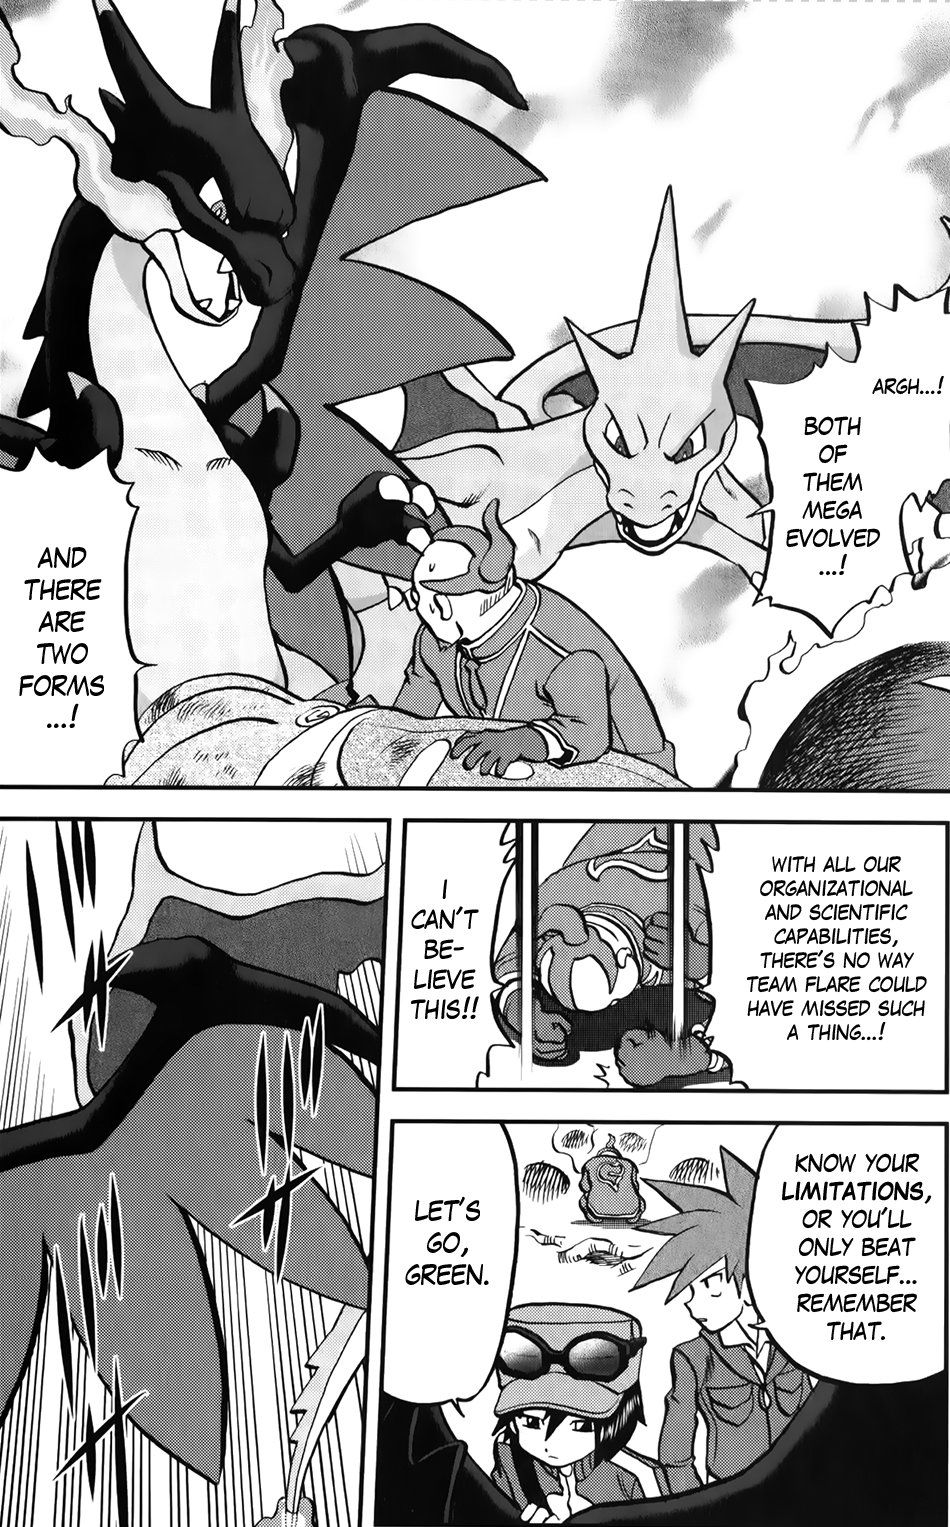 Pokémon Evolution - Mega Charizard Y Detail View